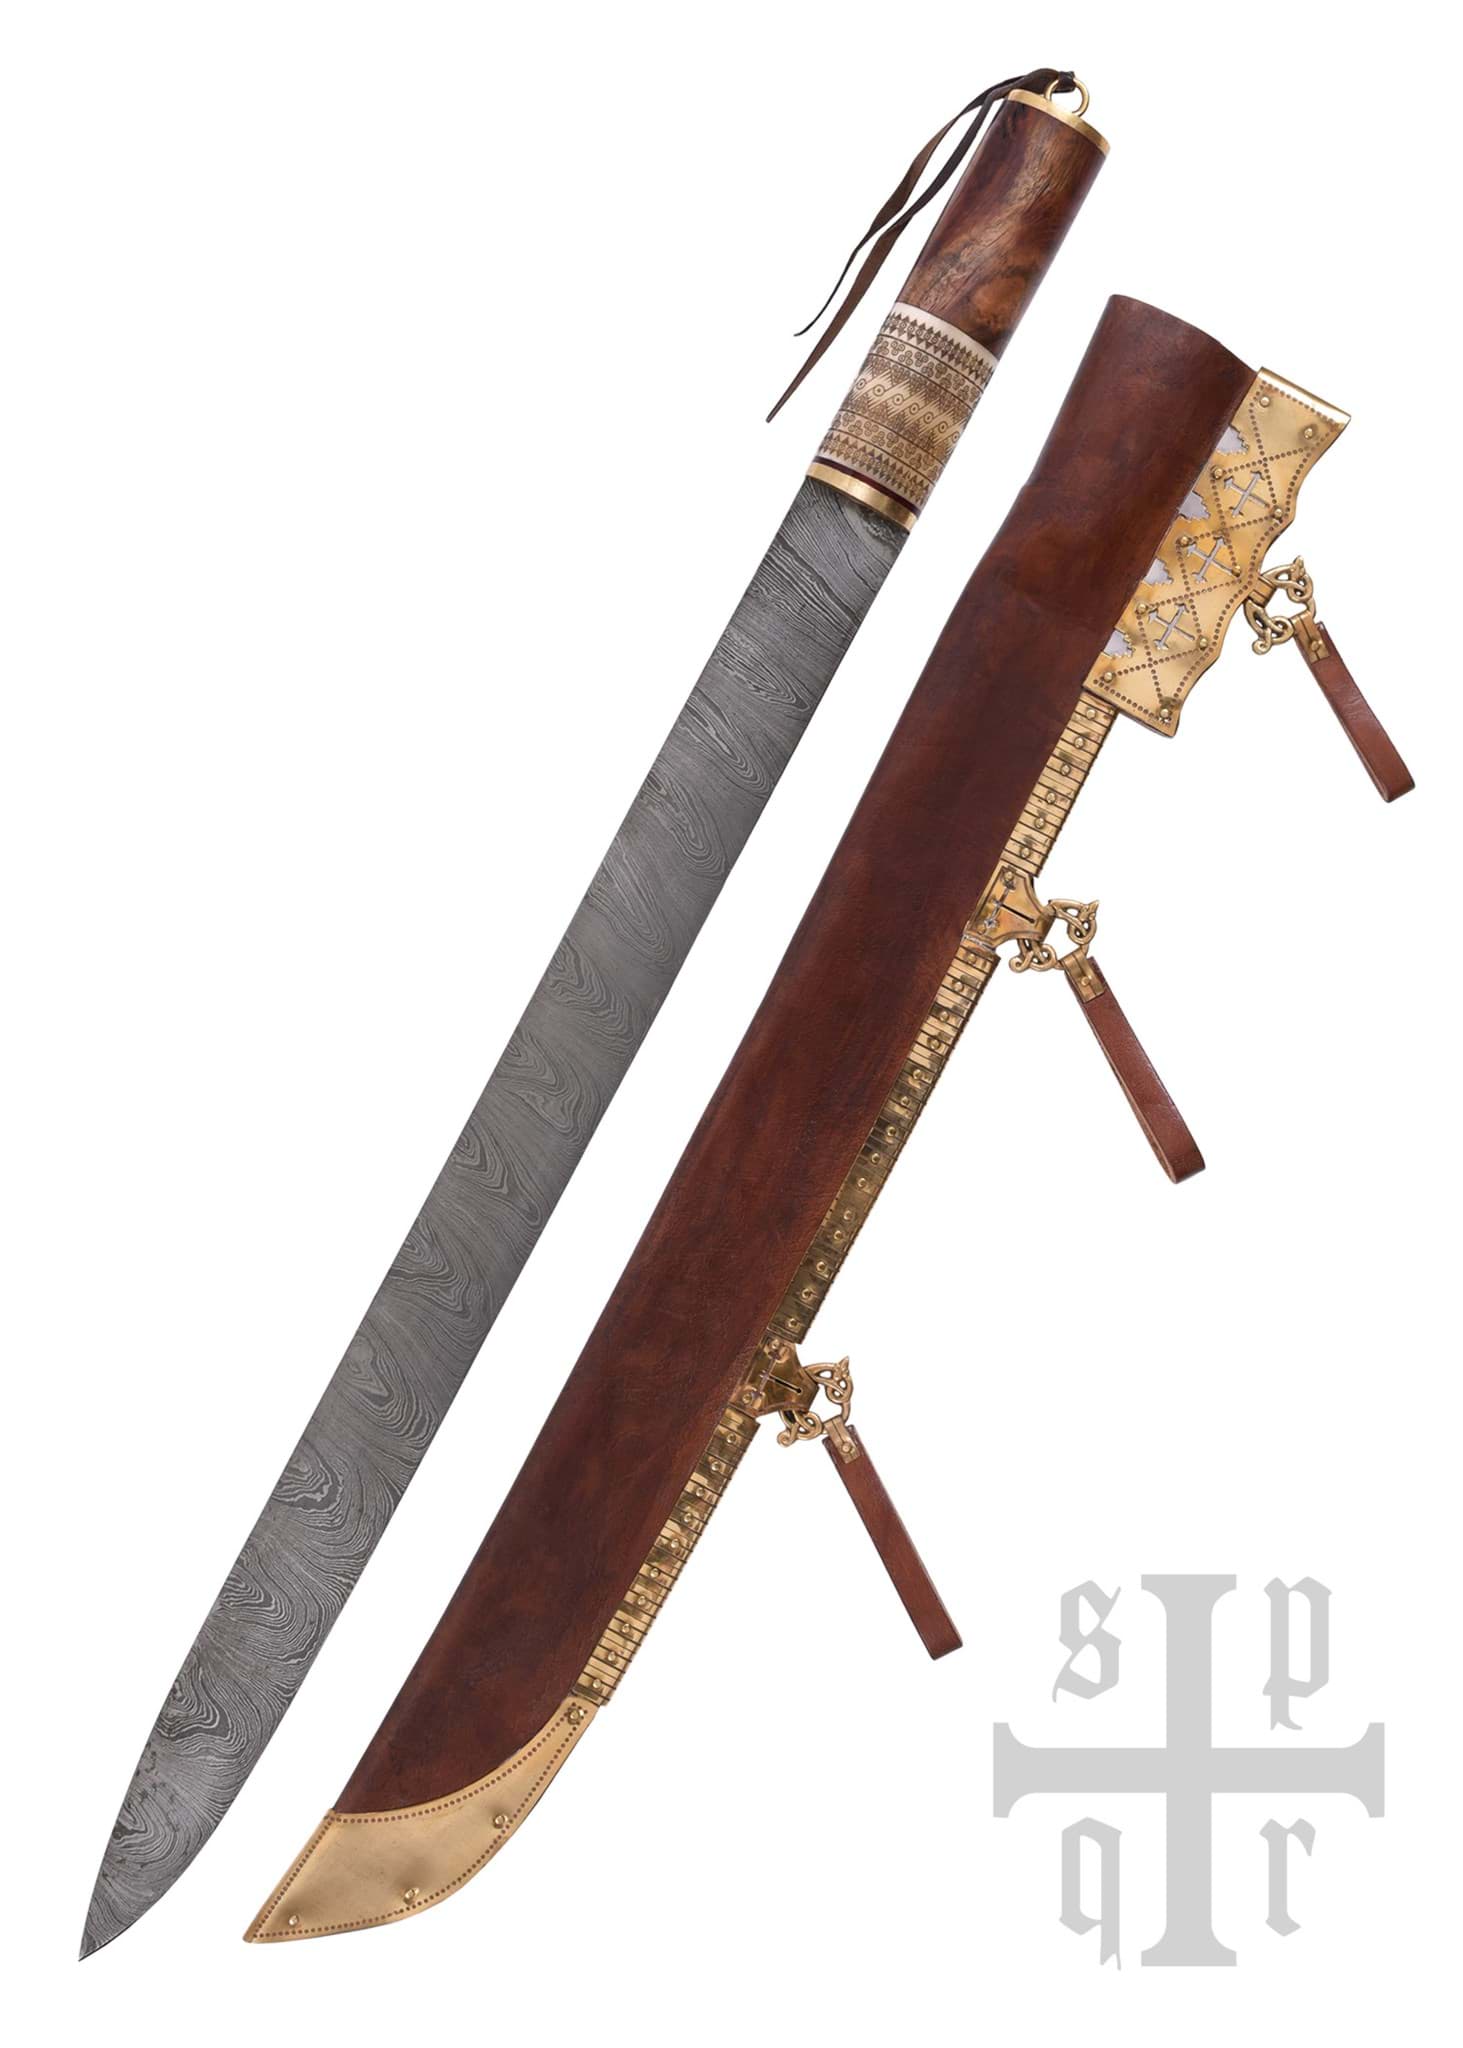 Picture of SPQR - Viking Long Seax from Birka Damascus Steel